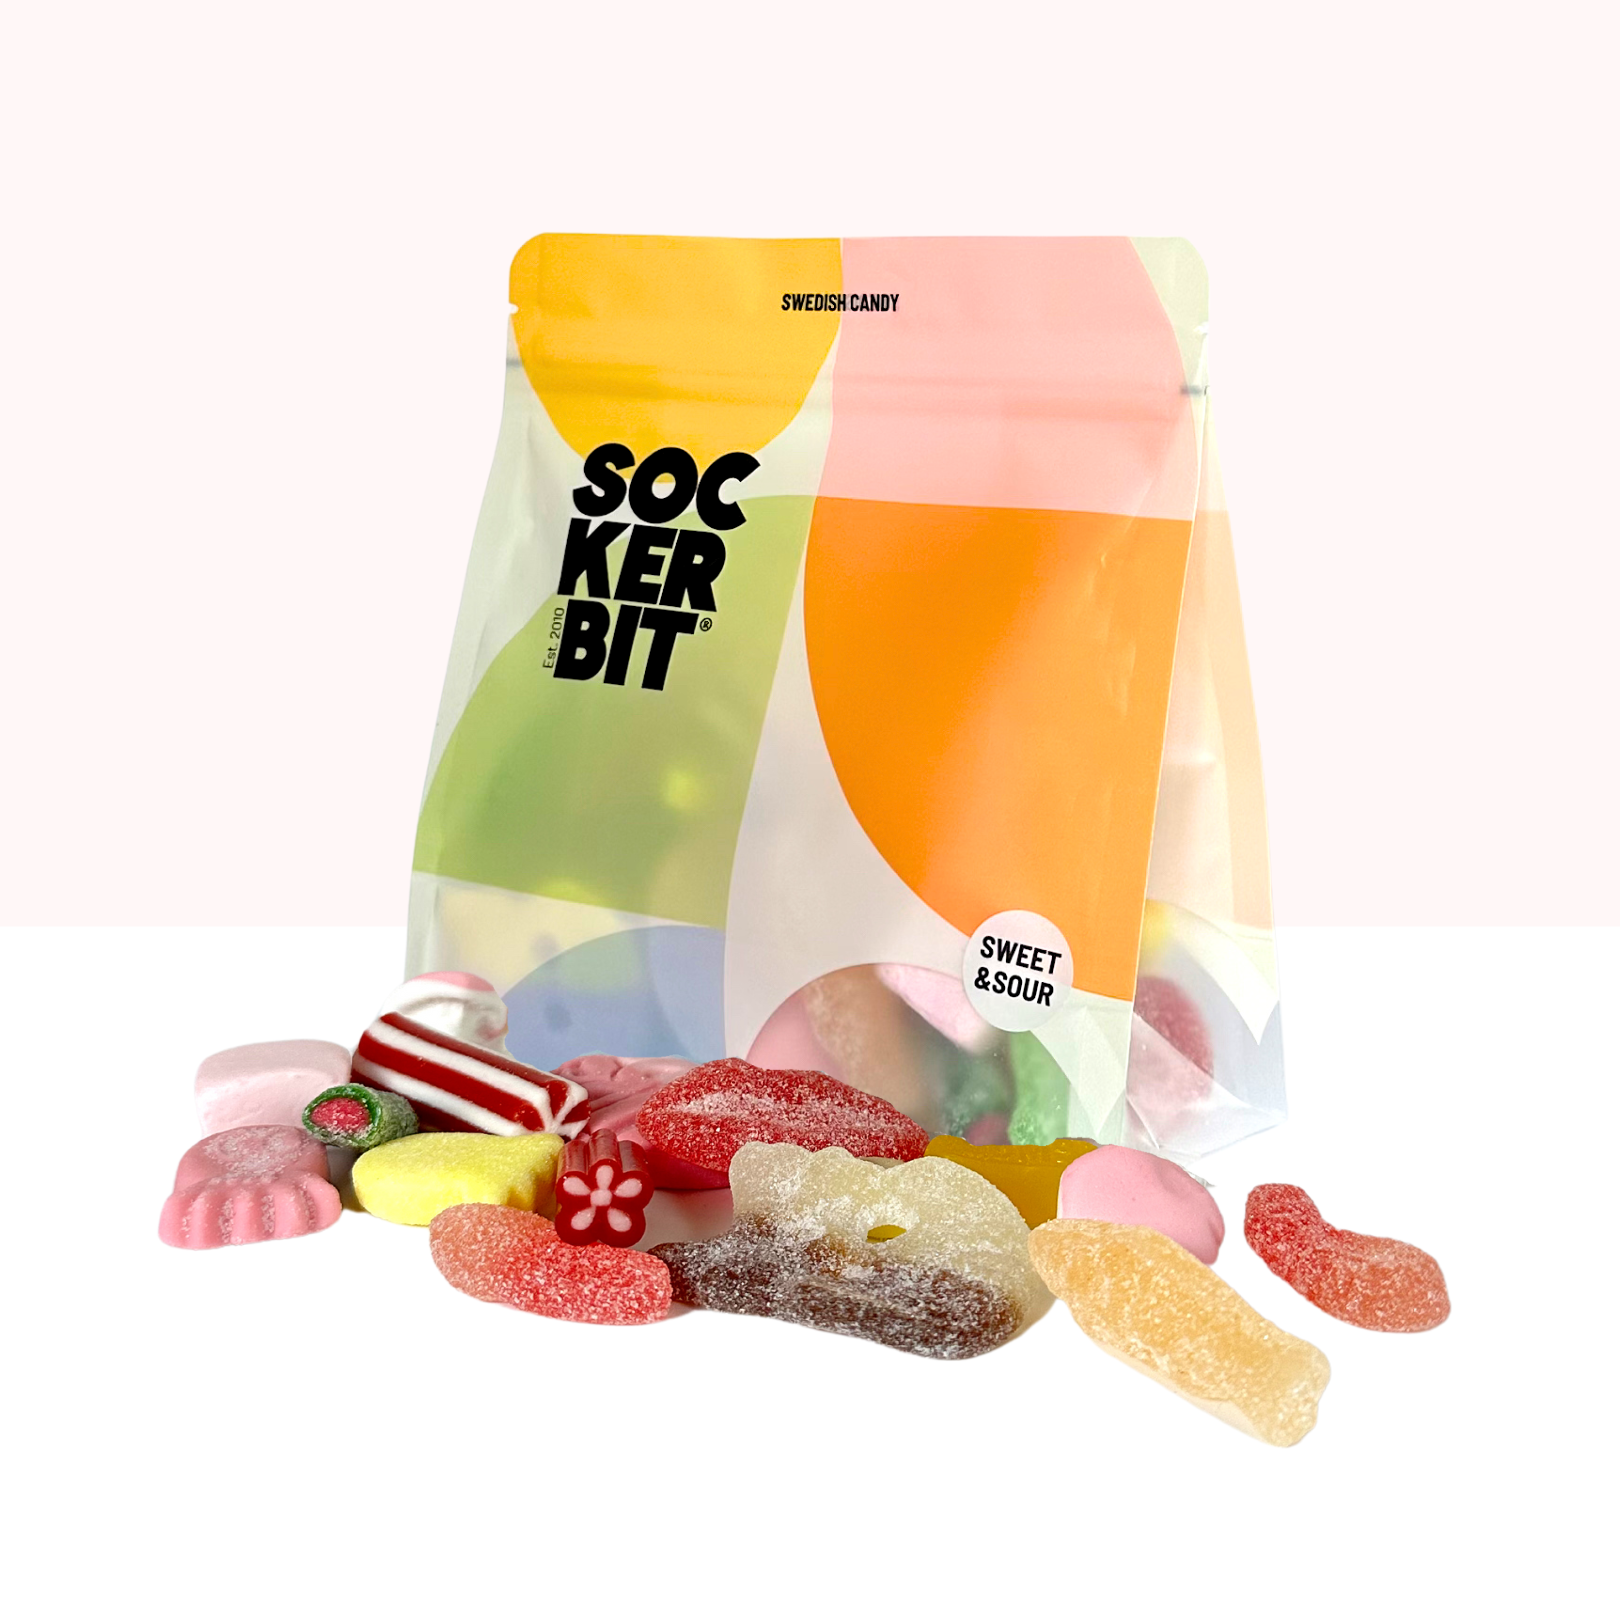 Mixed Pick 'n' Mix Bag - Candy Room